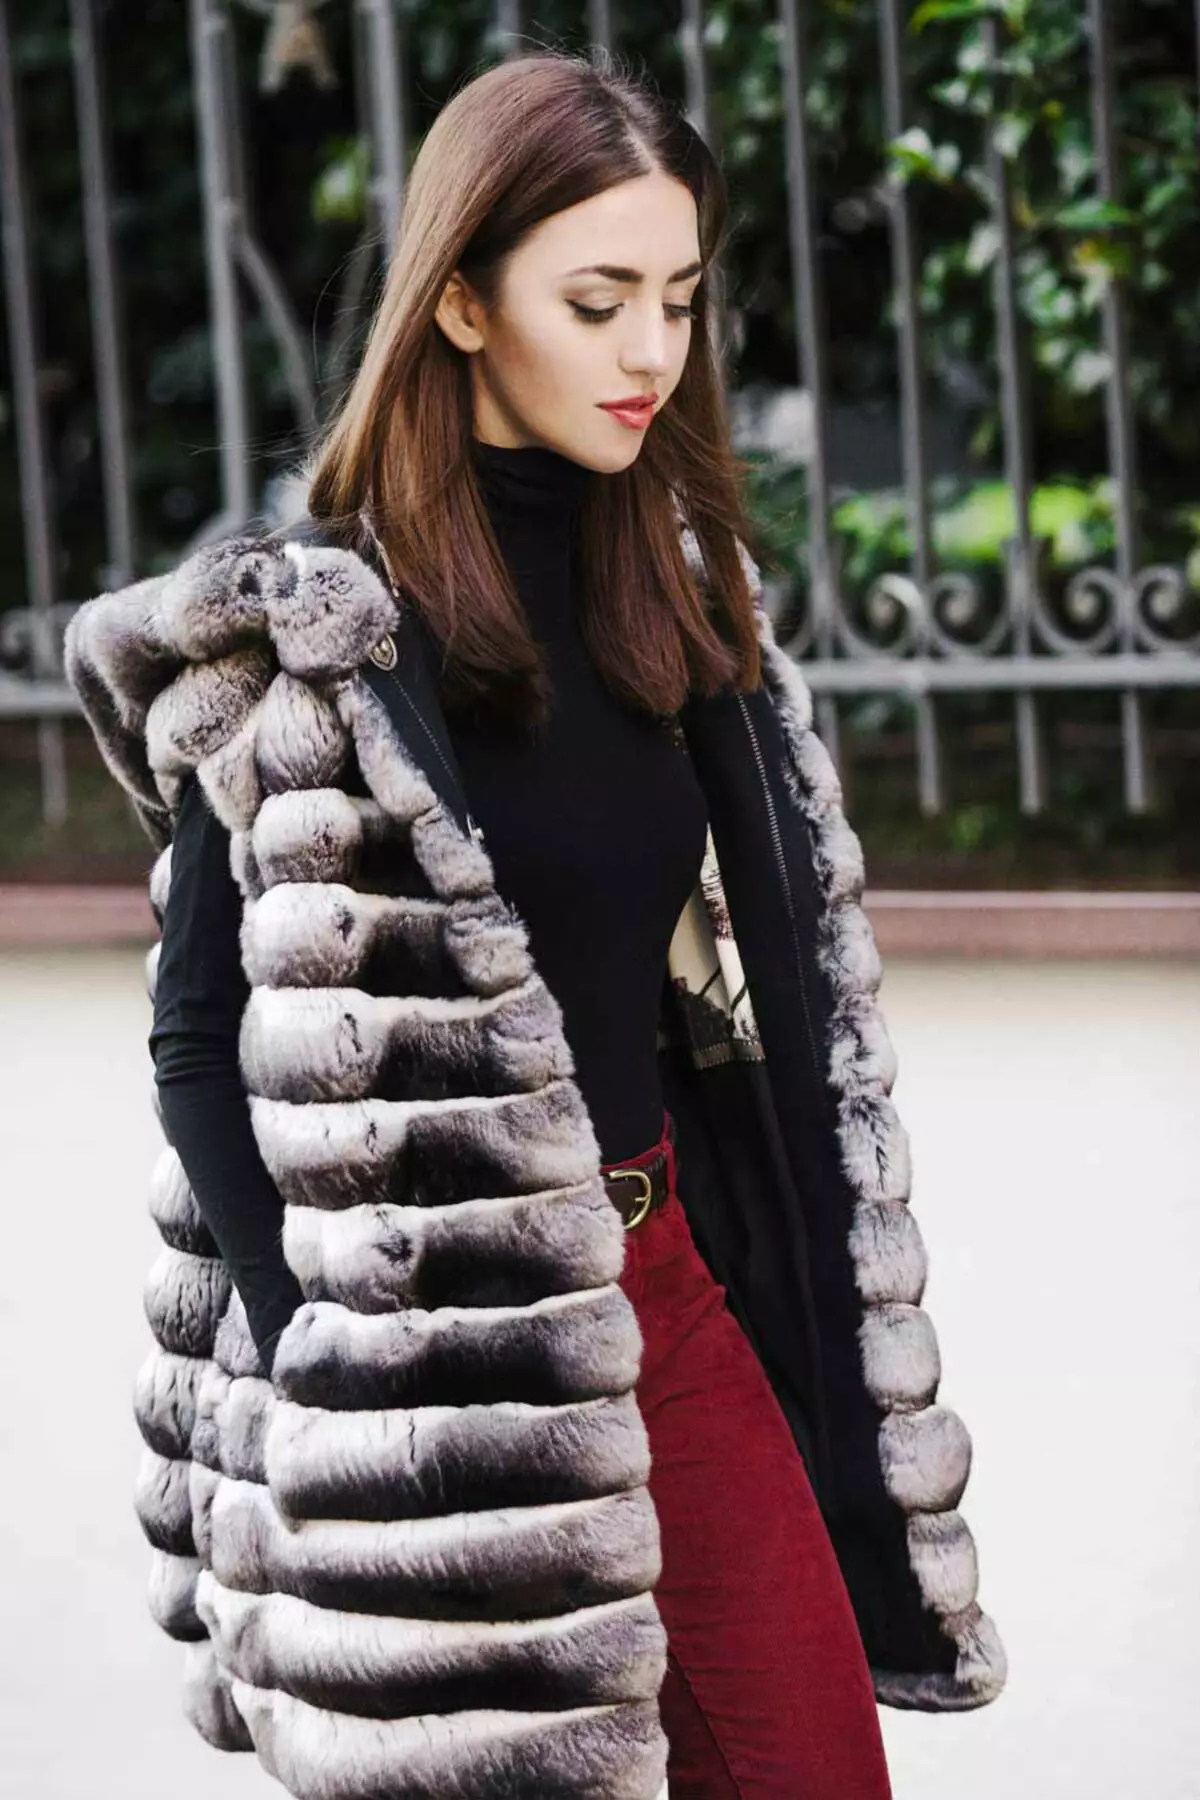 Shinchilla γούνα παλτό (91 φωτογραφίες): Πόσο είναι, λευκό, καφέ, κομμένο, τι παλτό τσιντσιλά, πλεκτά, σχόλια 759_45